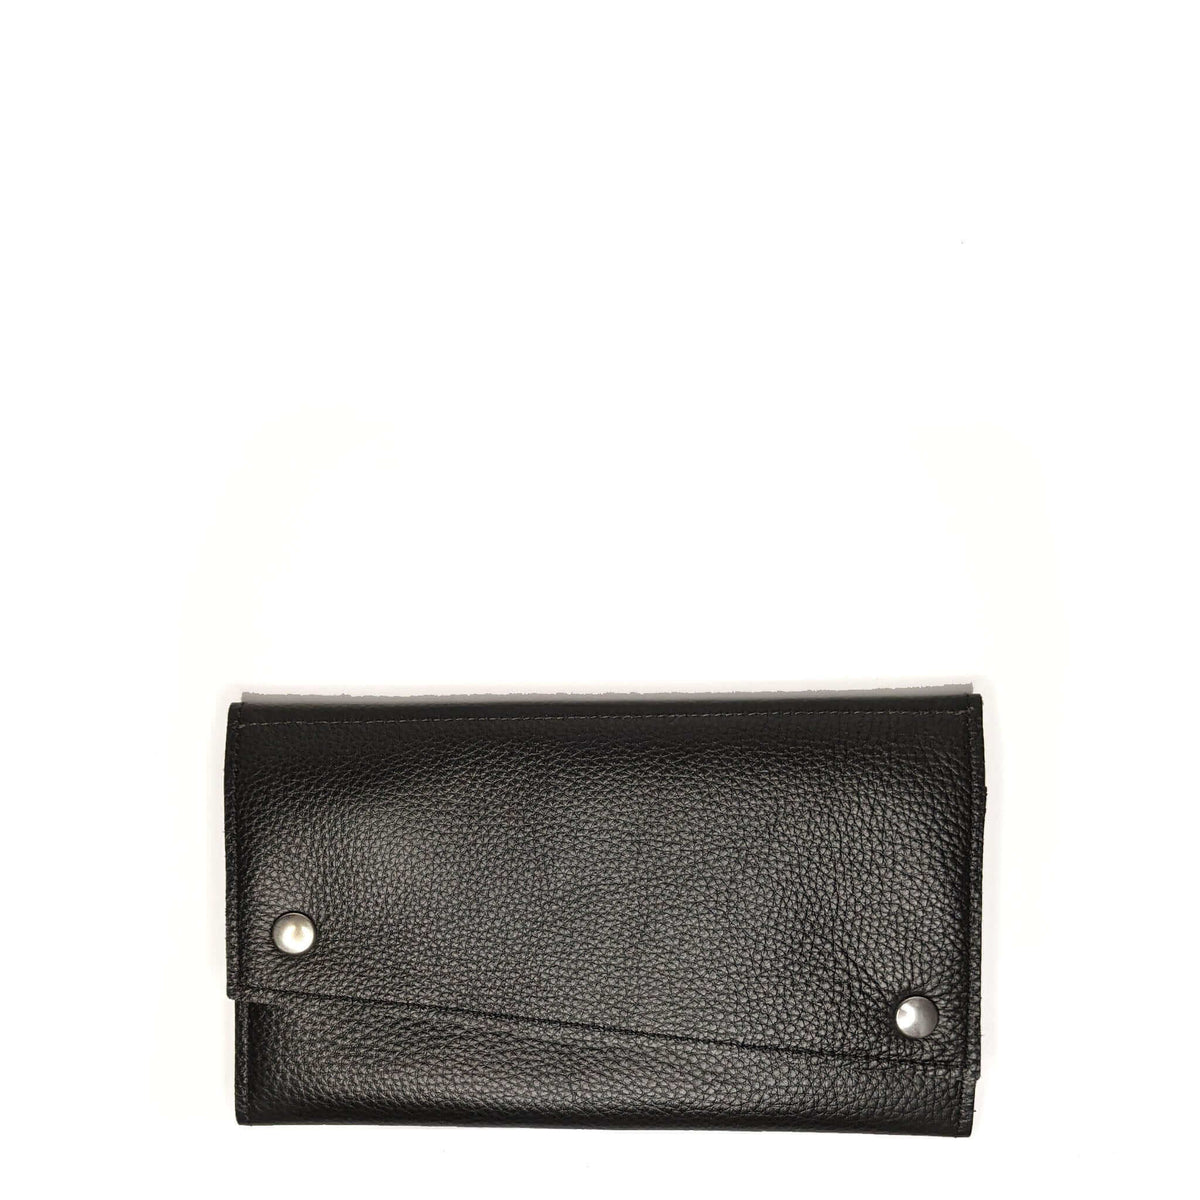 Leather Tri-fold Wallet - Black - Brynn Capella, leather accessories, usa